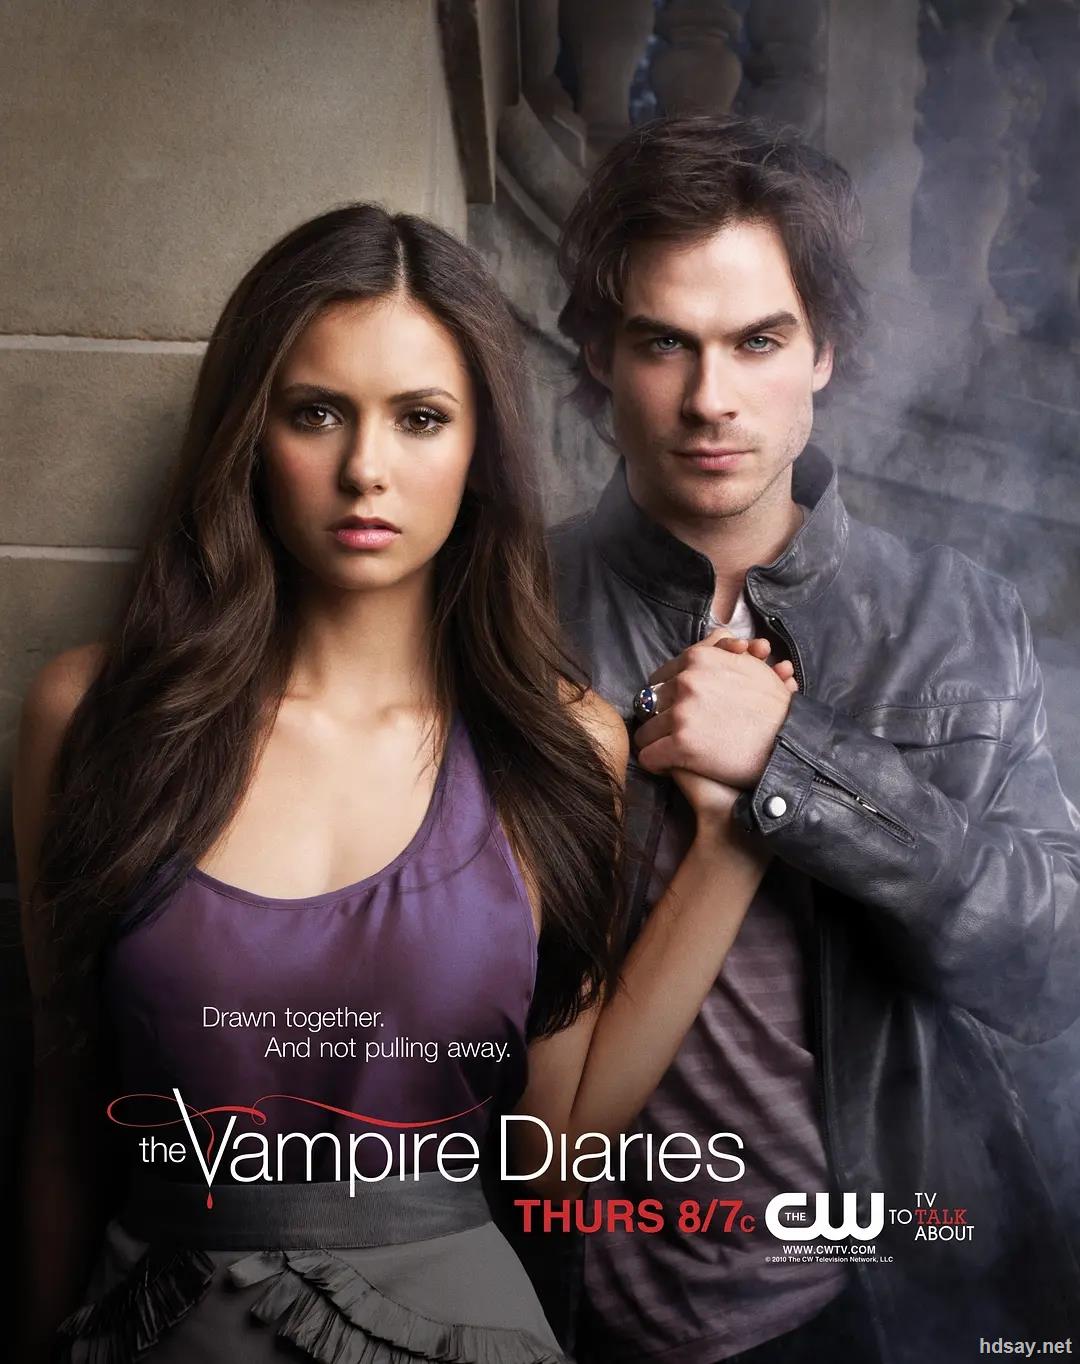 The Vampire Diaries - The Vampire Diaries TV Show Photo (7286947) - Fanpop